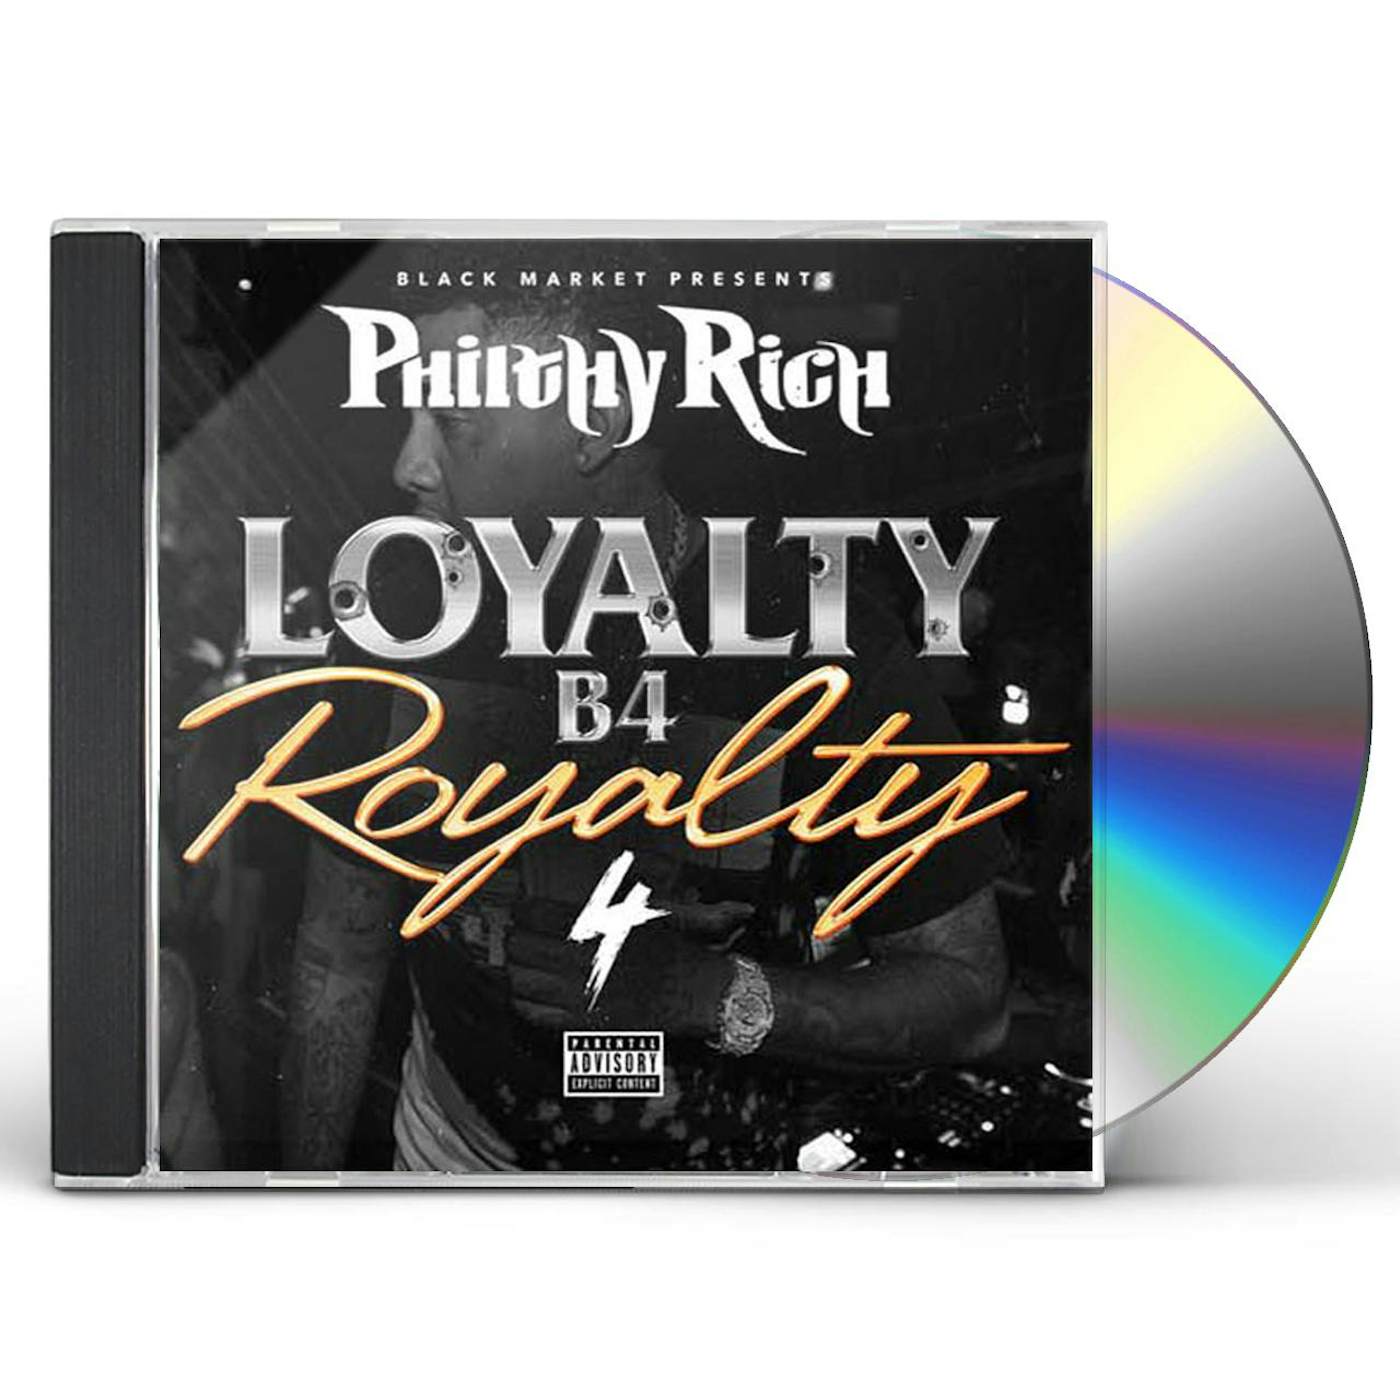 Philthy Rich LOYALTY B4 ROYALTY 4 CD